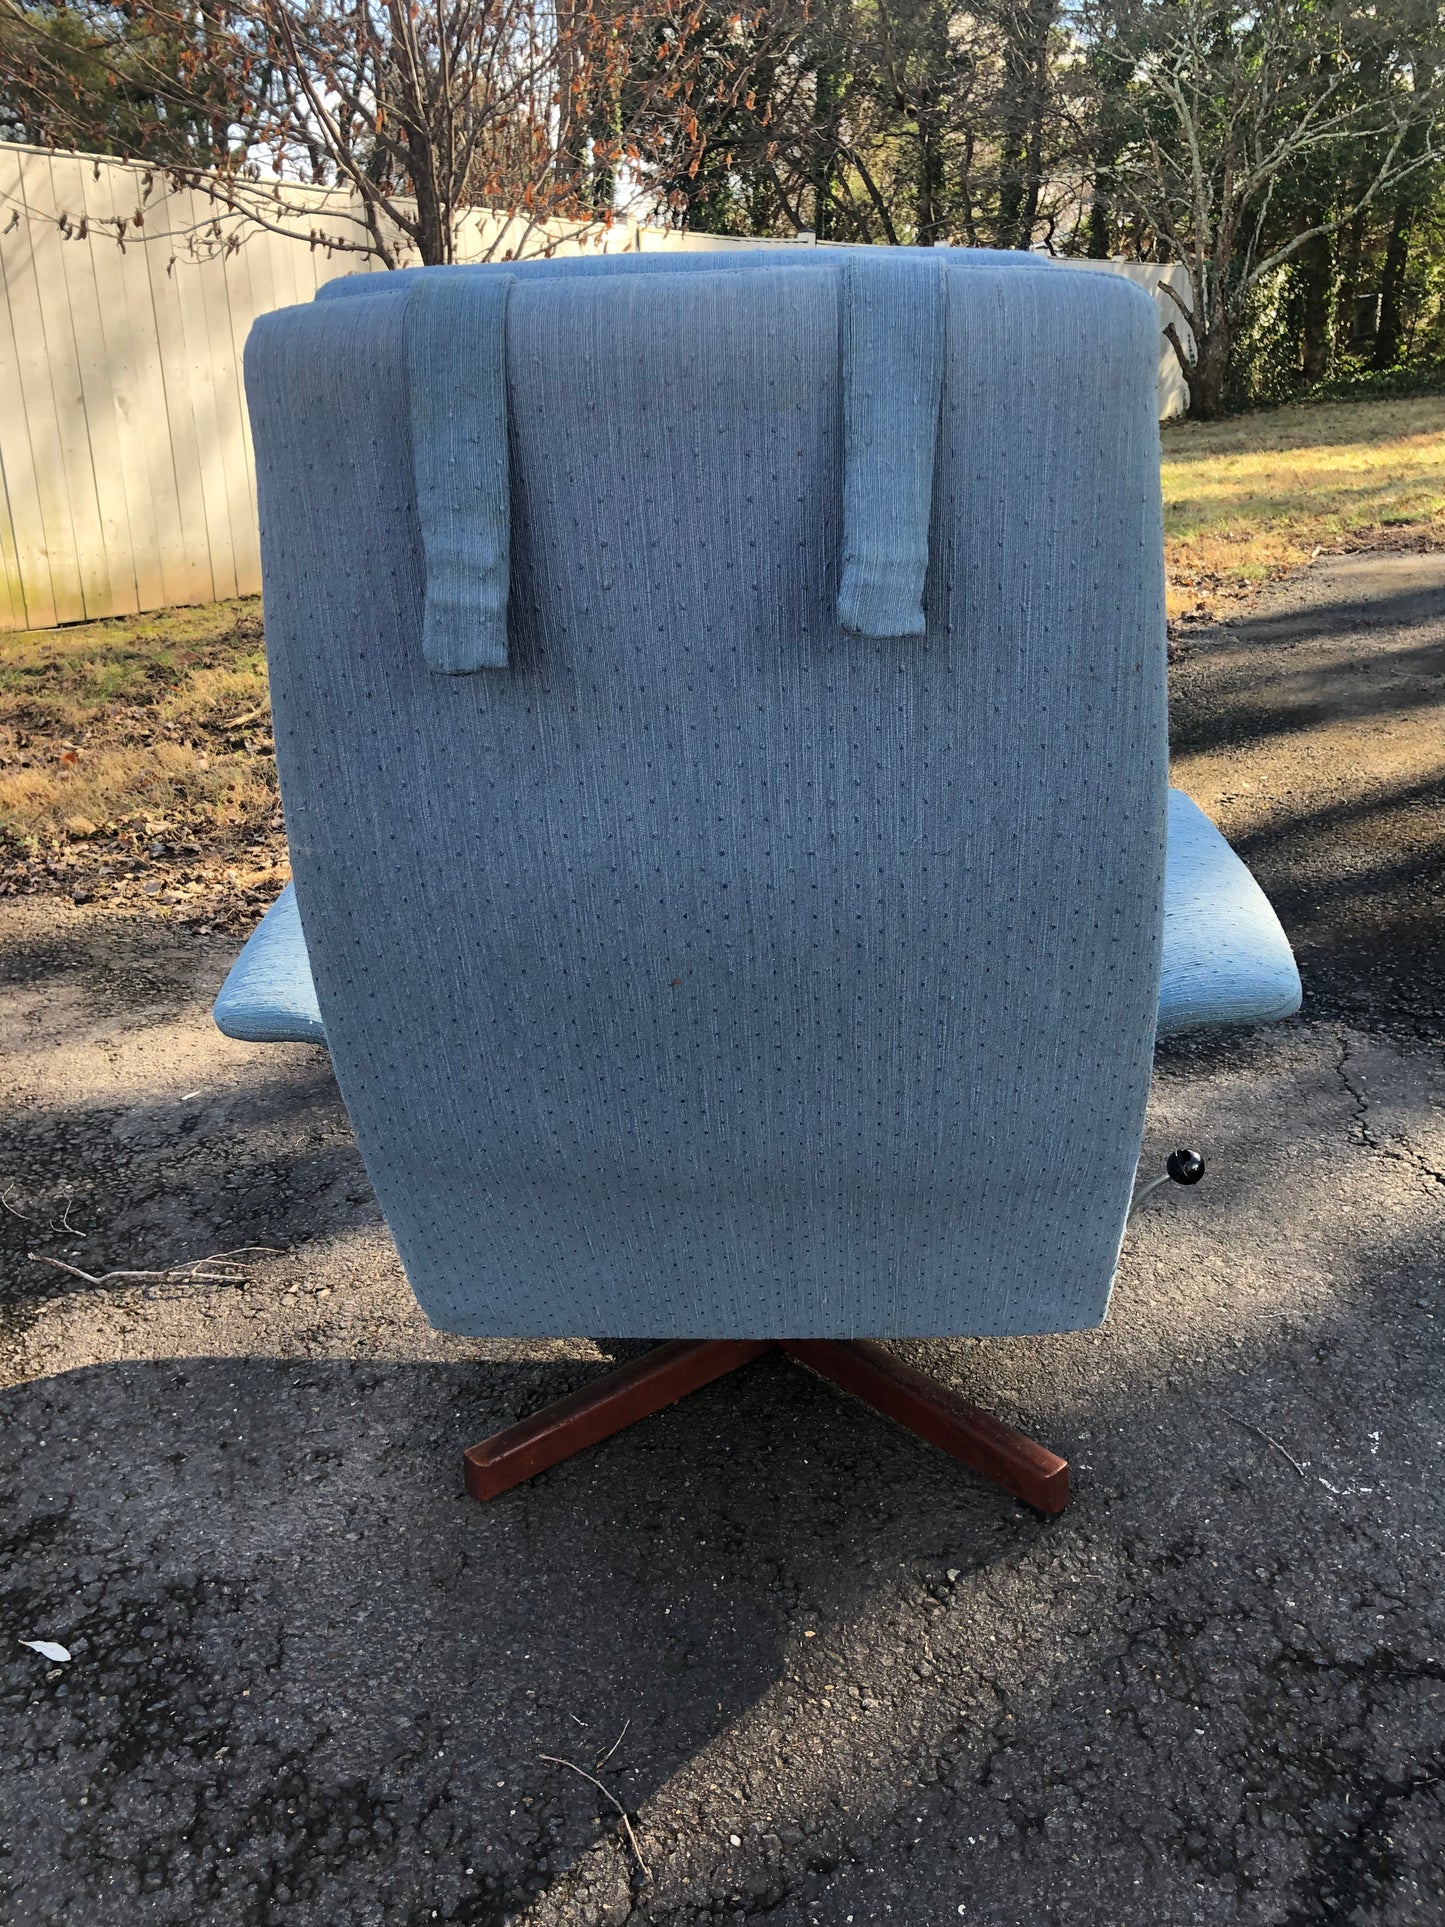 Midcentury-modern Danish reclining lounge chair